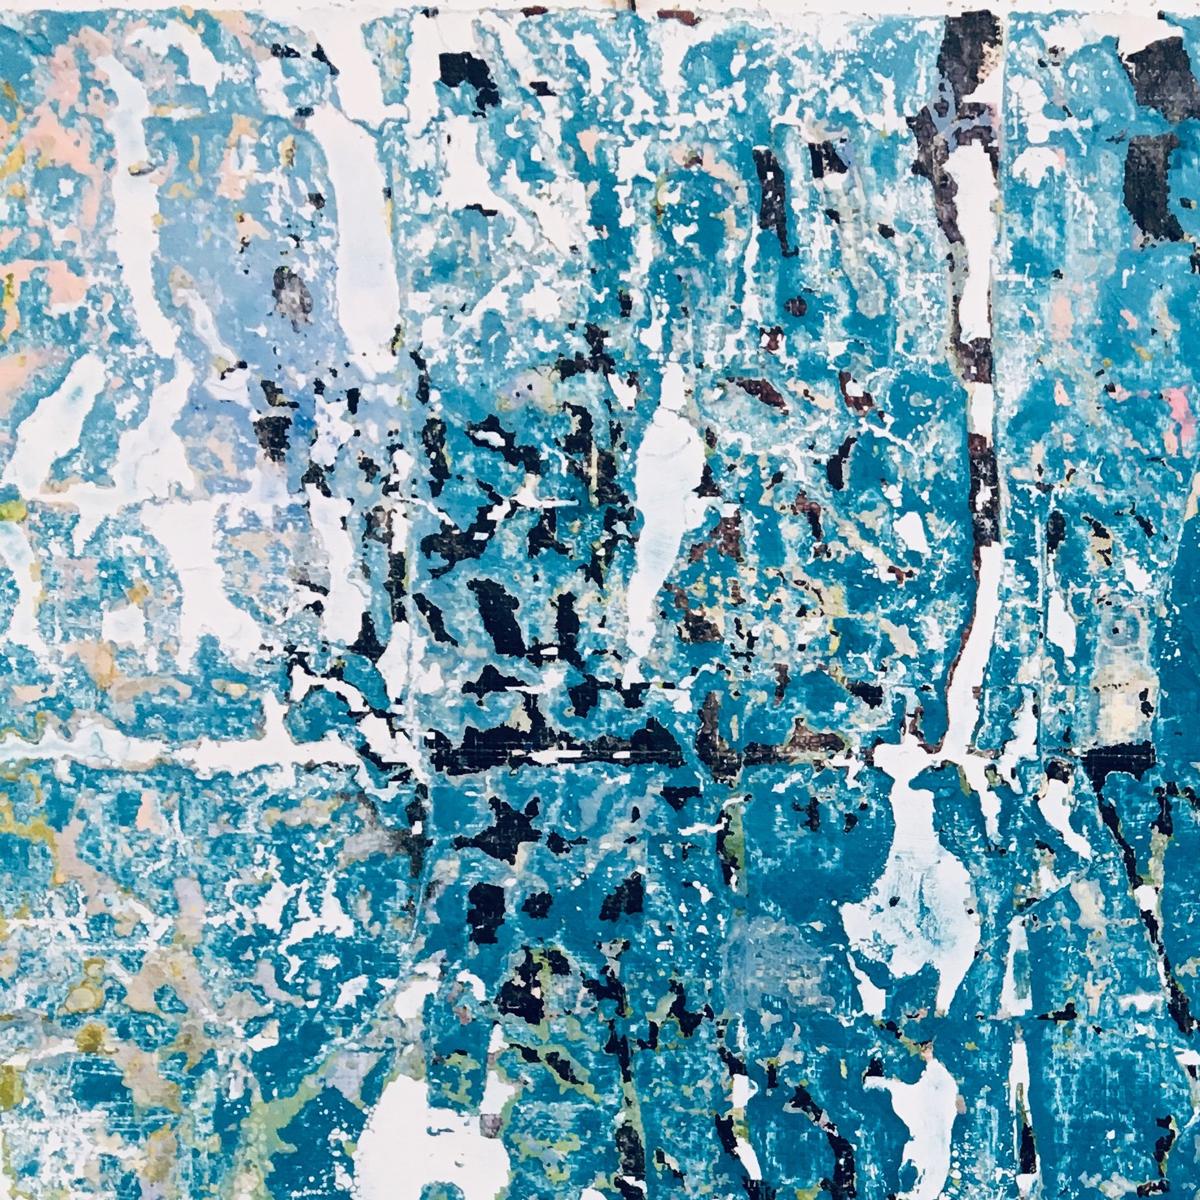 Blue Ice, Mid Century, vivid blue tones, abstract, textured acrylic on paper - Abstract Mixed Media Art by Bonny Novesky